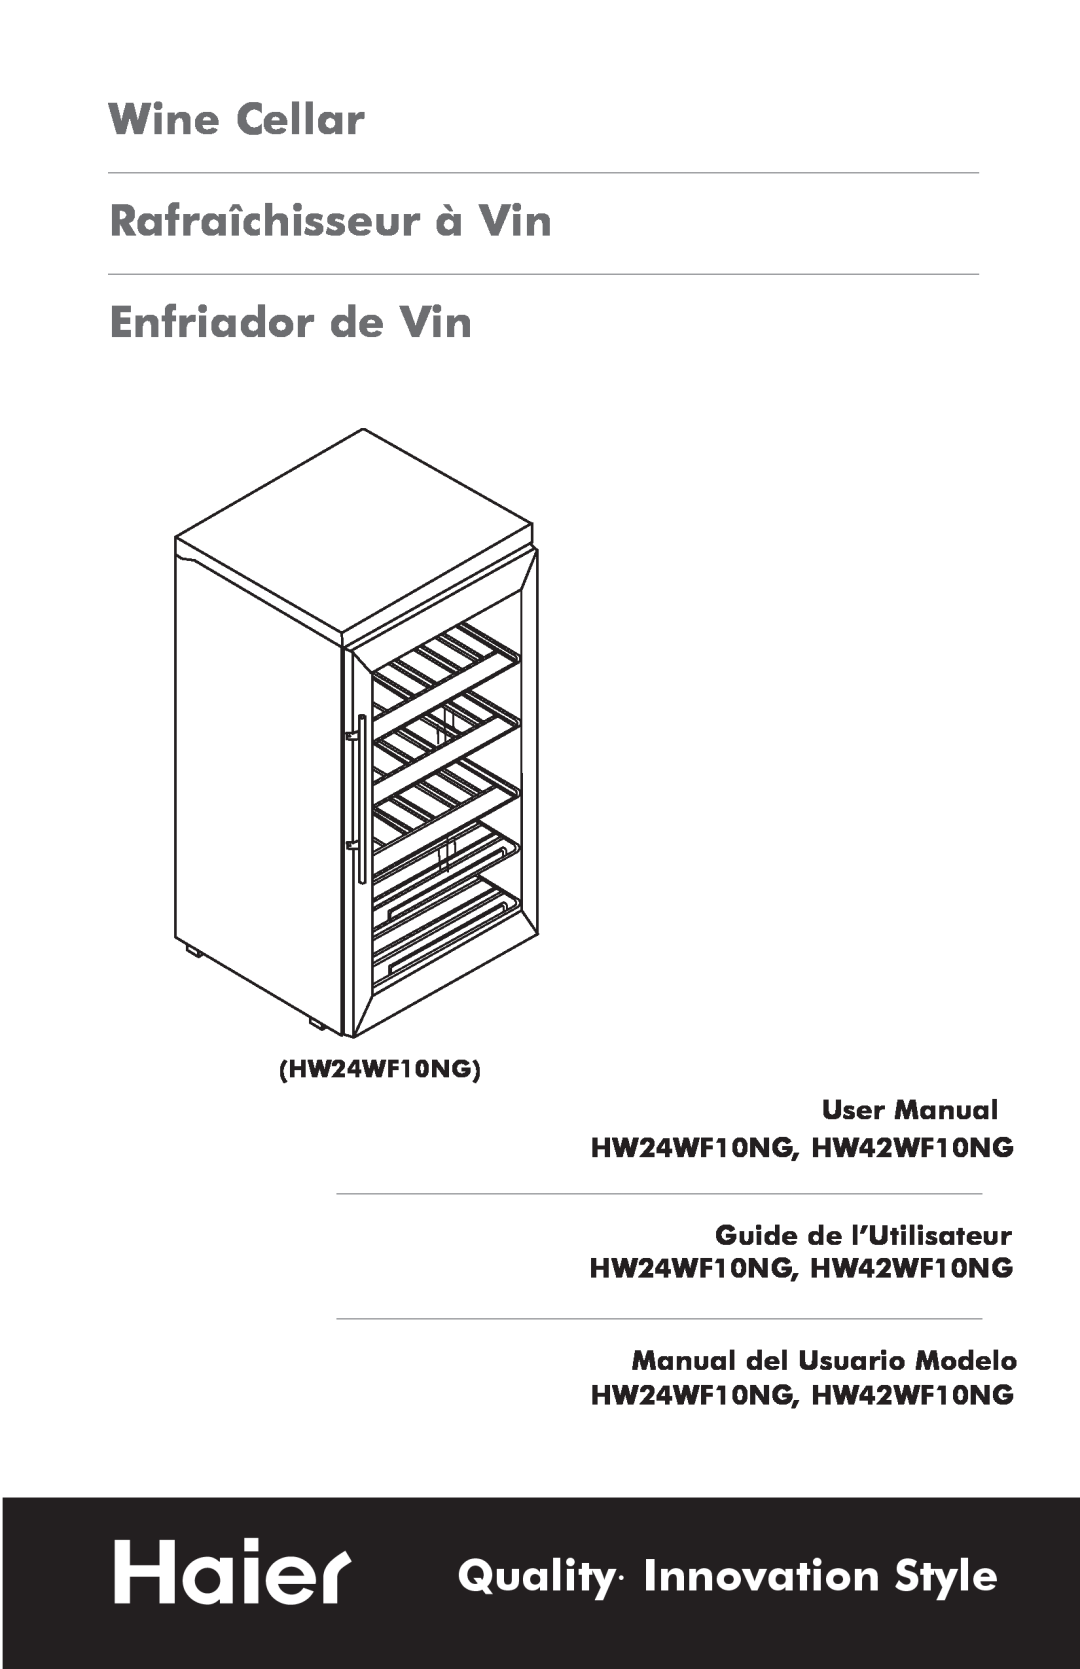 Haier user manual User Manual HW24WF10NG, HW42WF10NG Guide de l’Utilisateur, Quality Innovation Style 